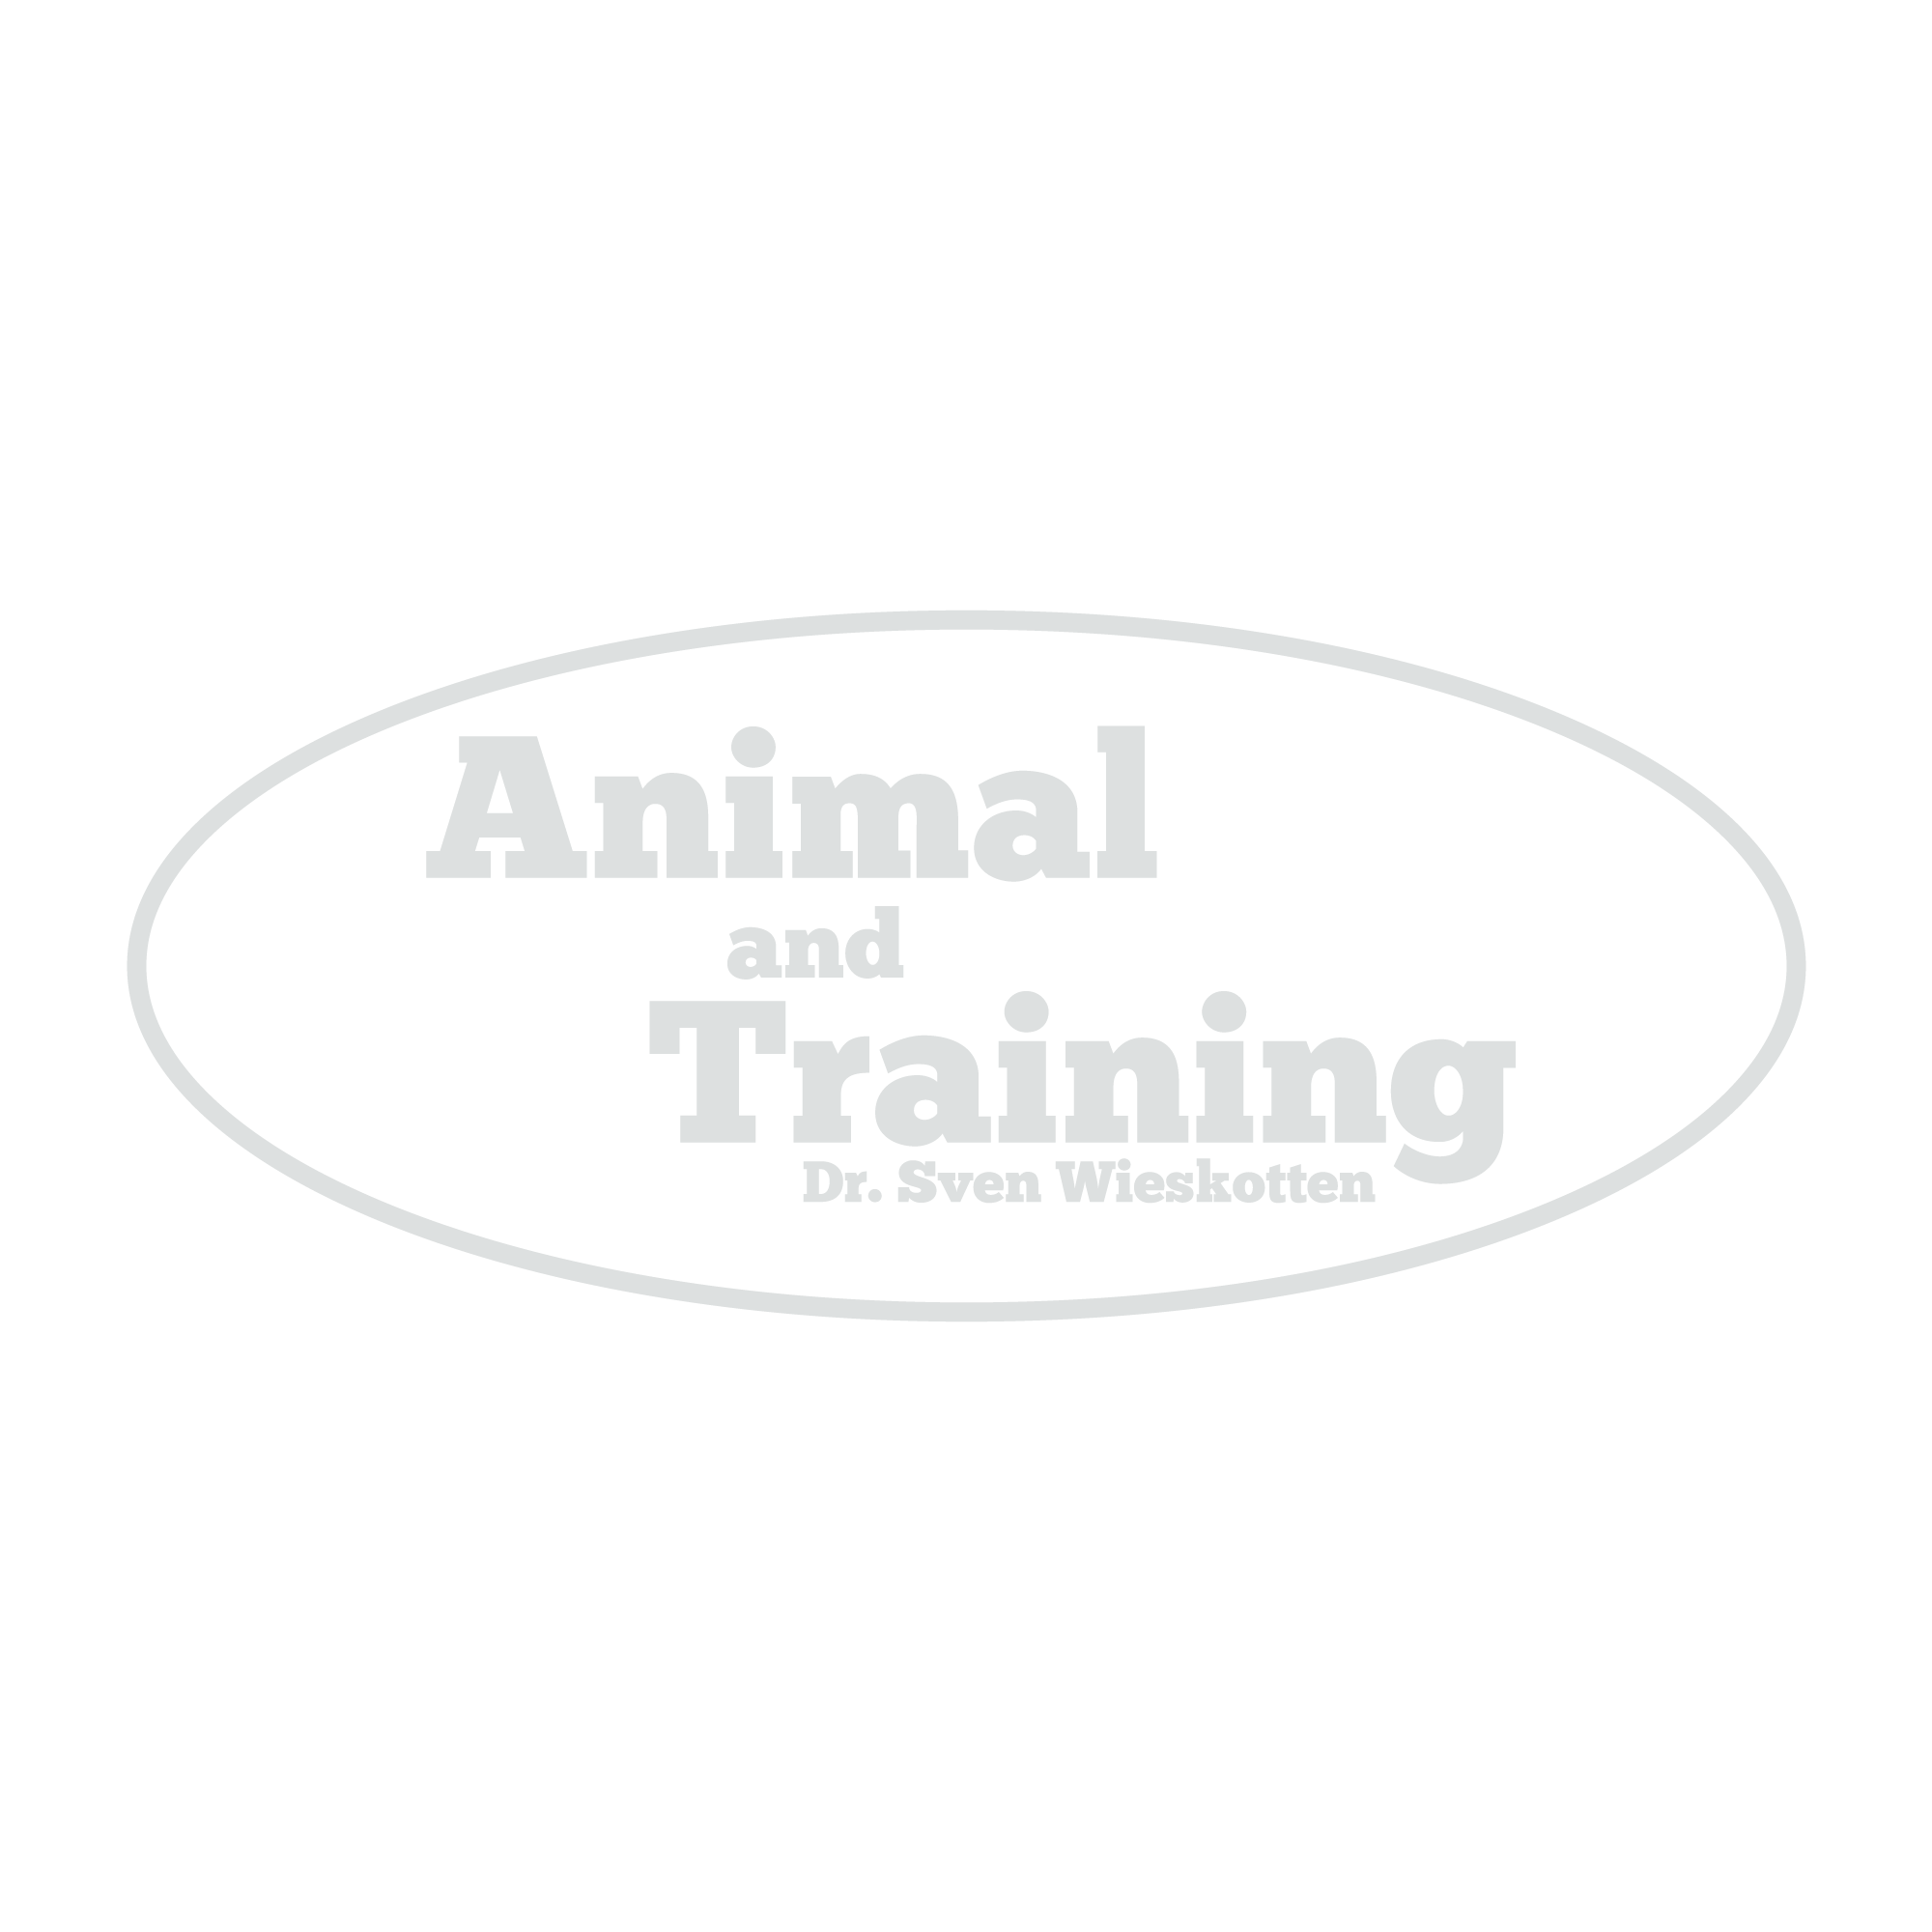 (c) Animal-and-training.de